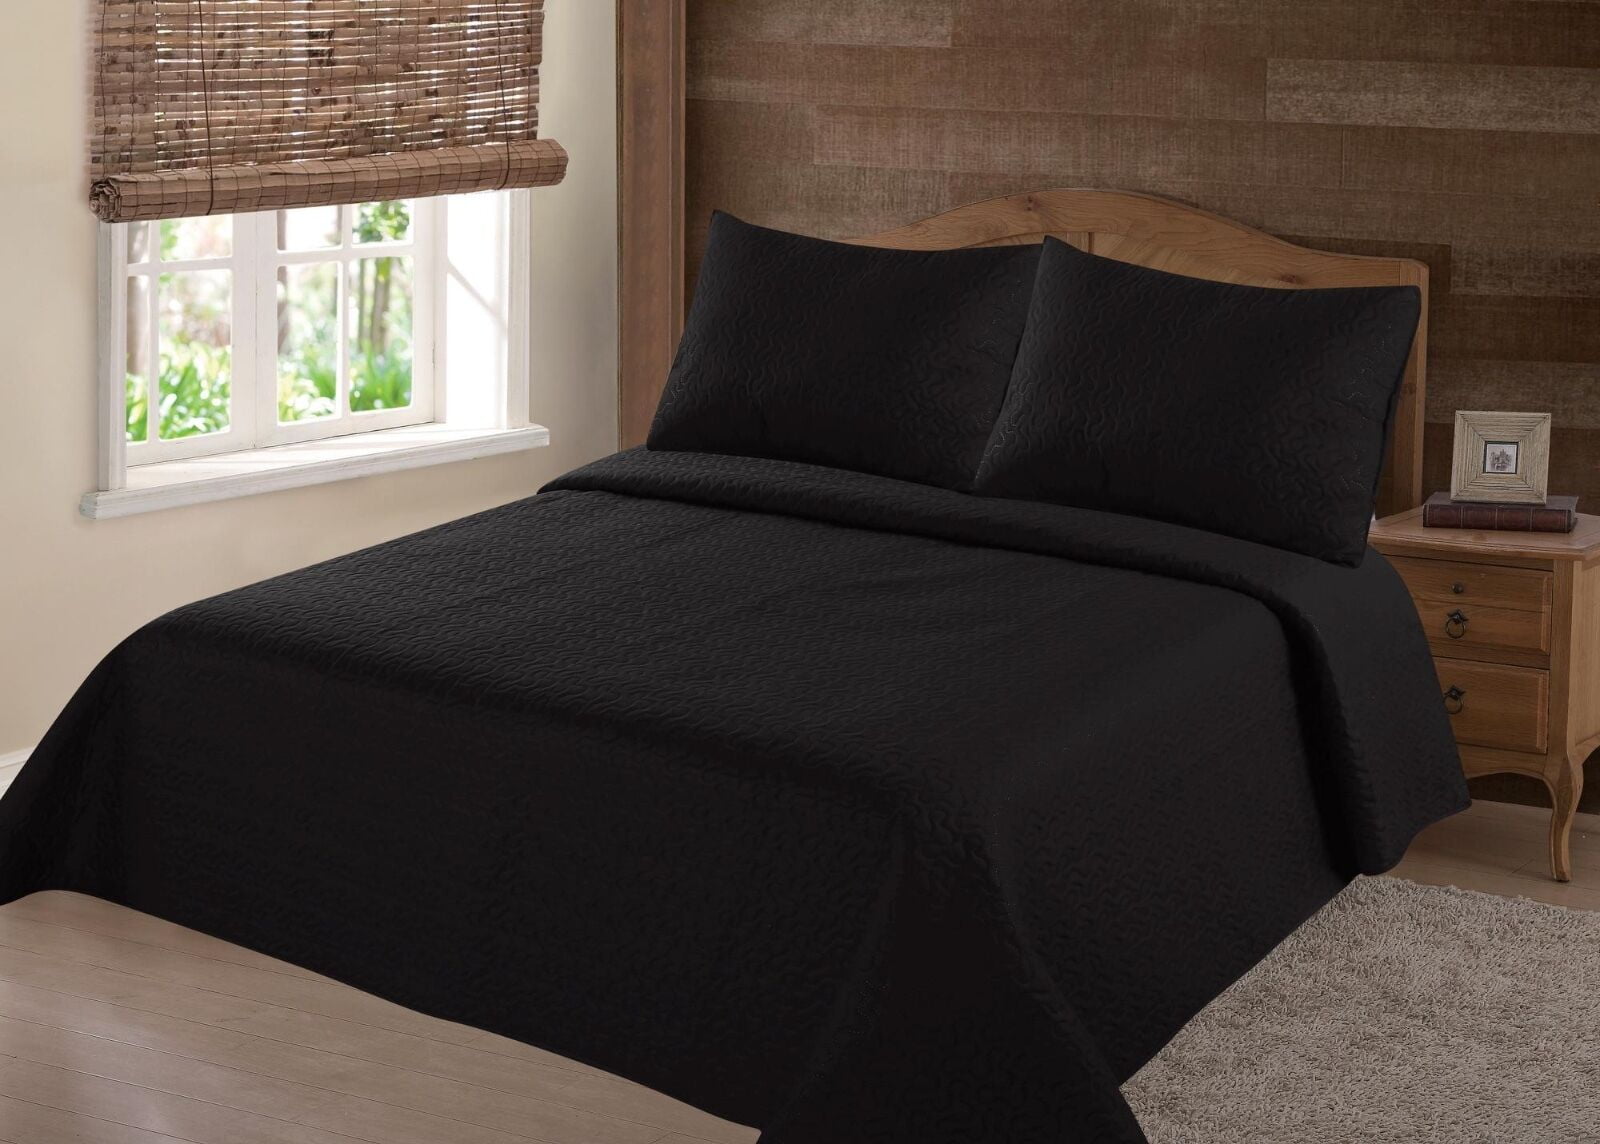 HEIMO 3-Piece Oversized Bedspread Coverlet Set for Queen King Size Bed Black, Queen